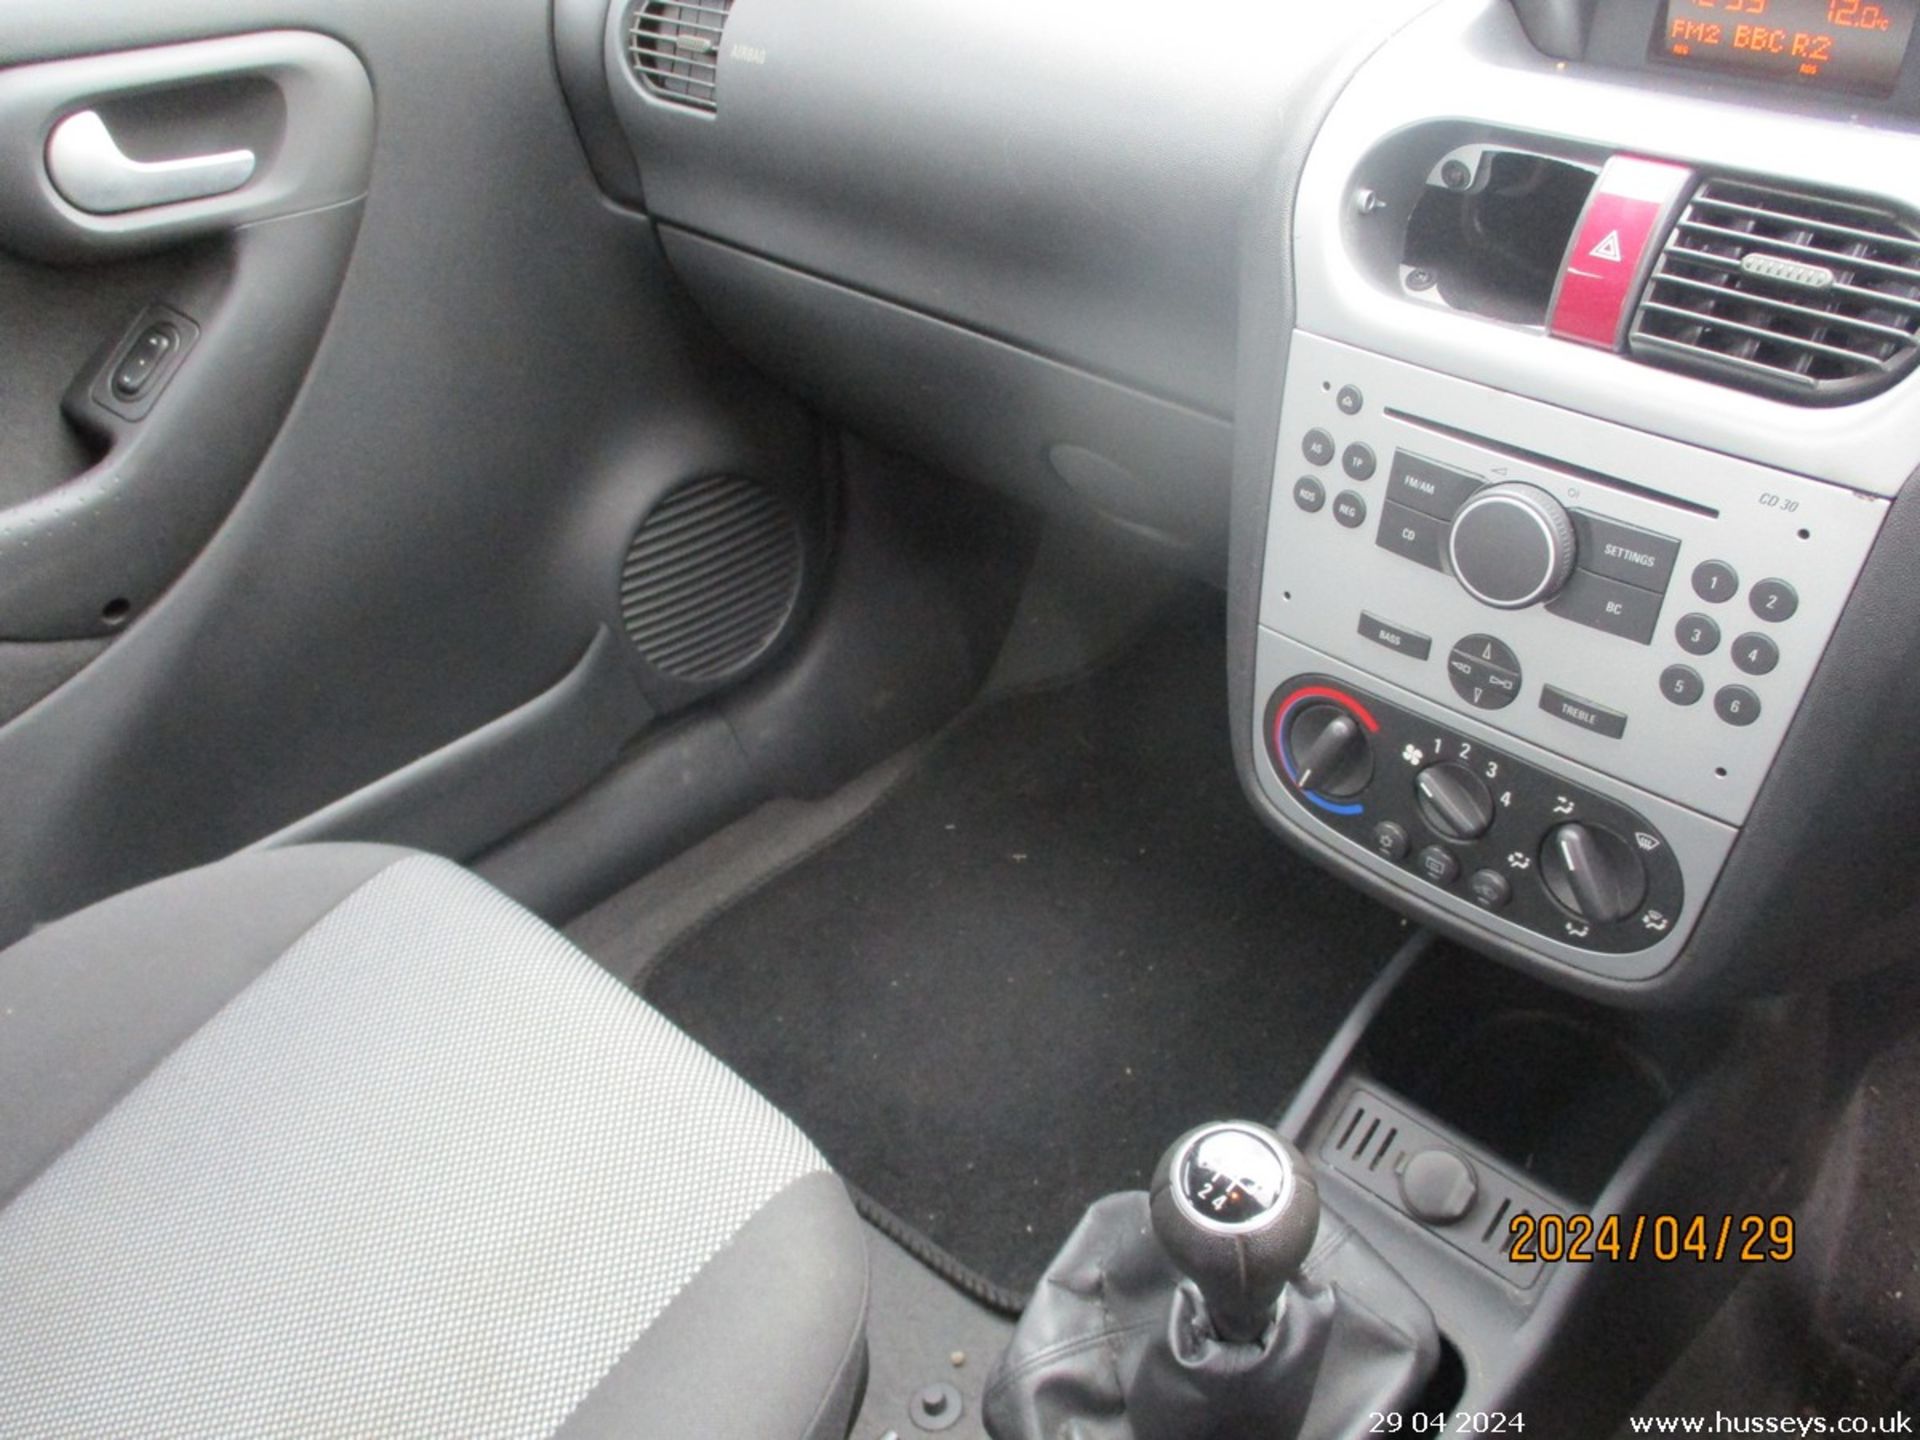 06/06 VAUXHALL CORSA DESIGN TWINPORT - 1229cc 5dr Hatchback (Black) - Image 19 of 19